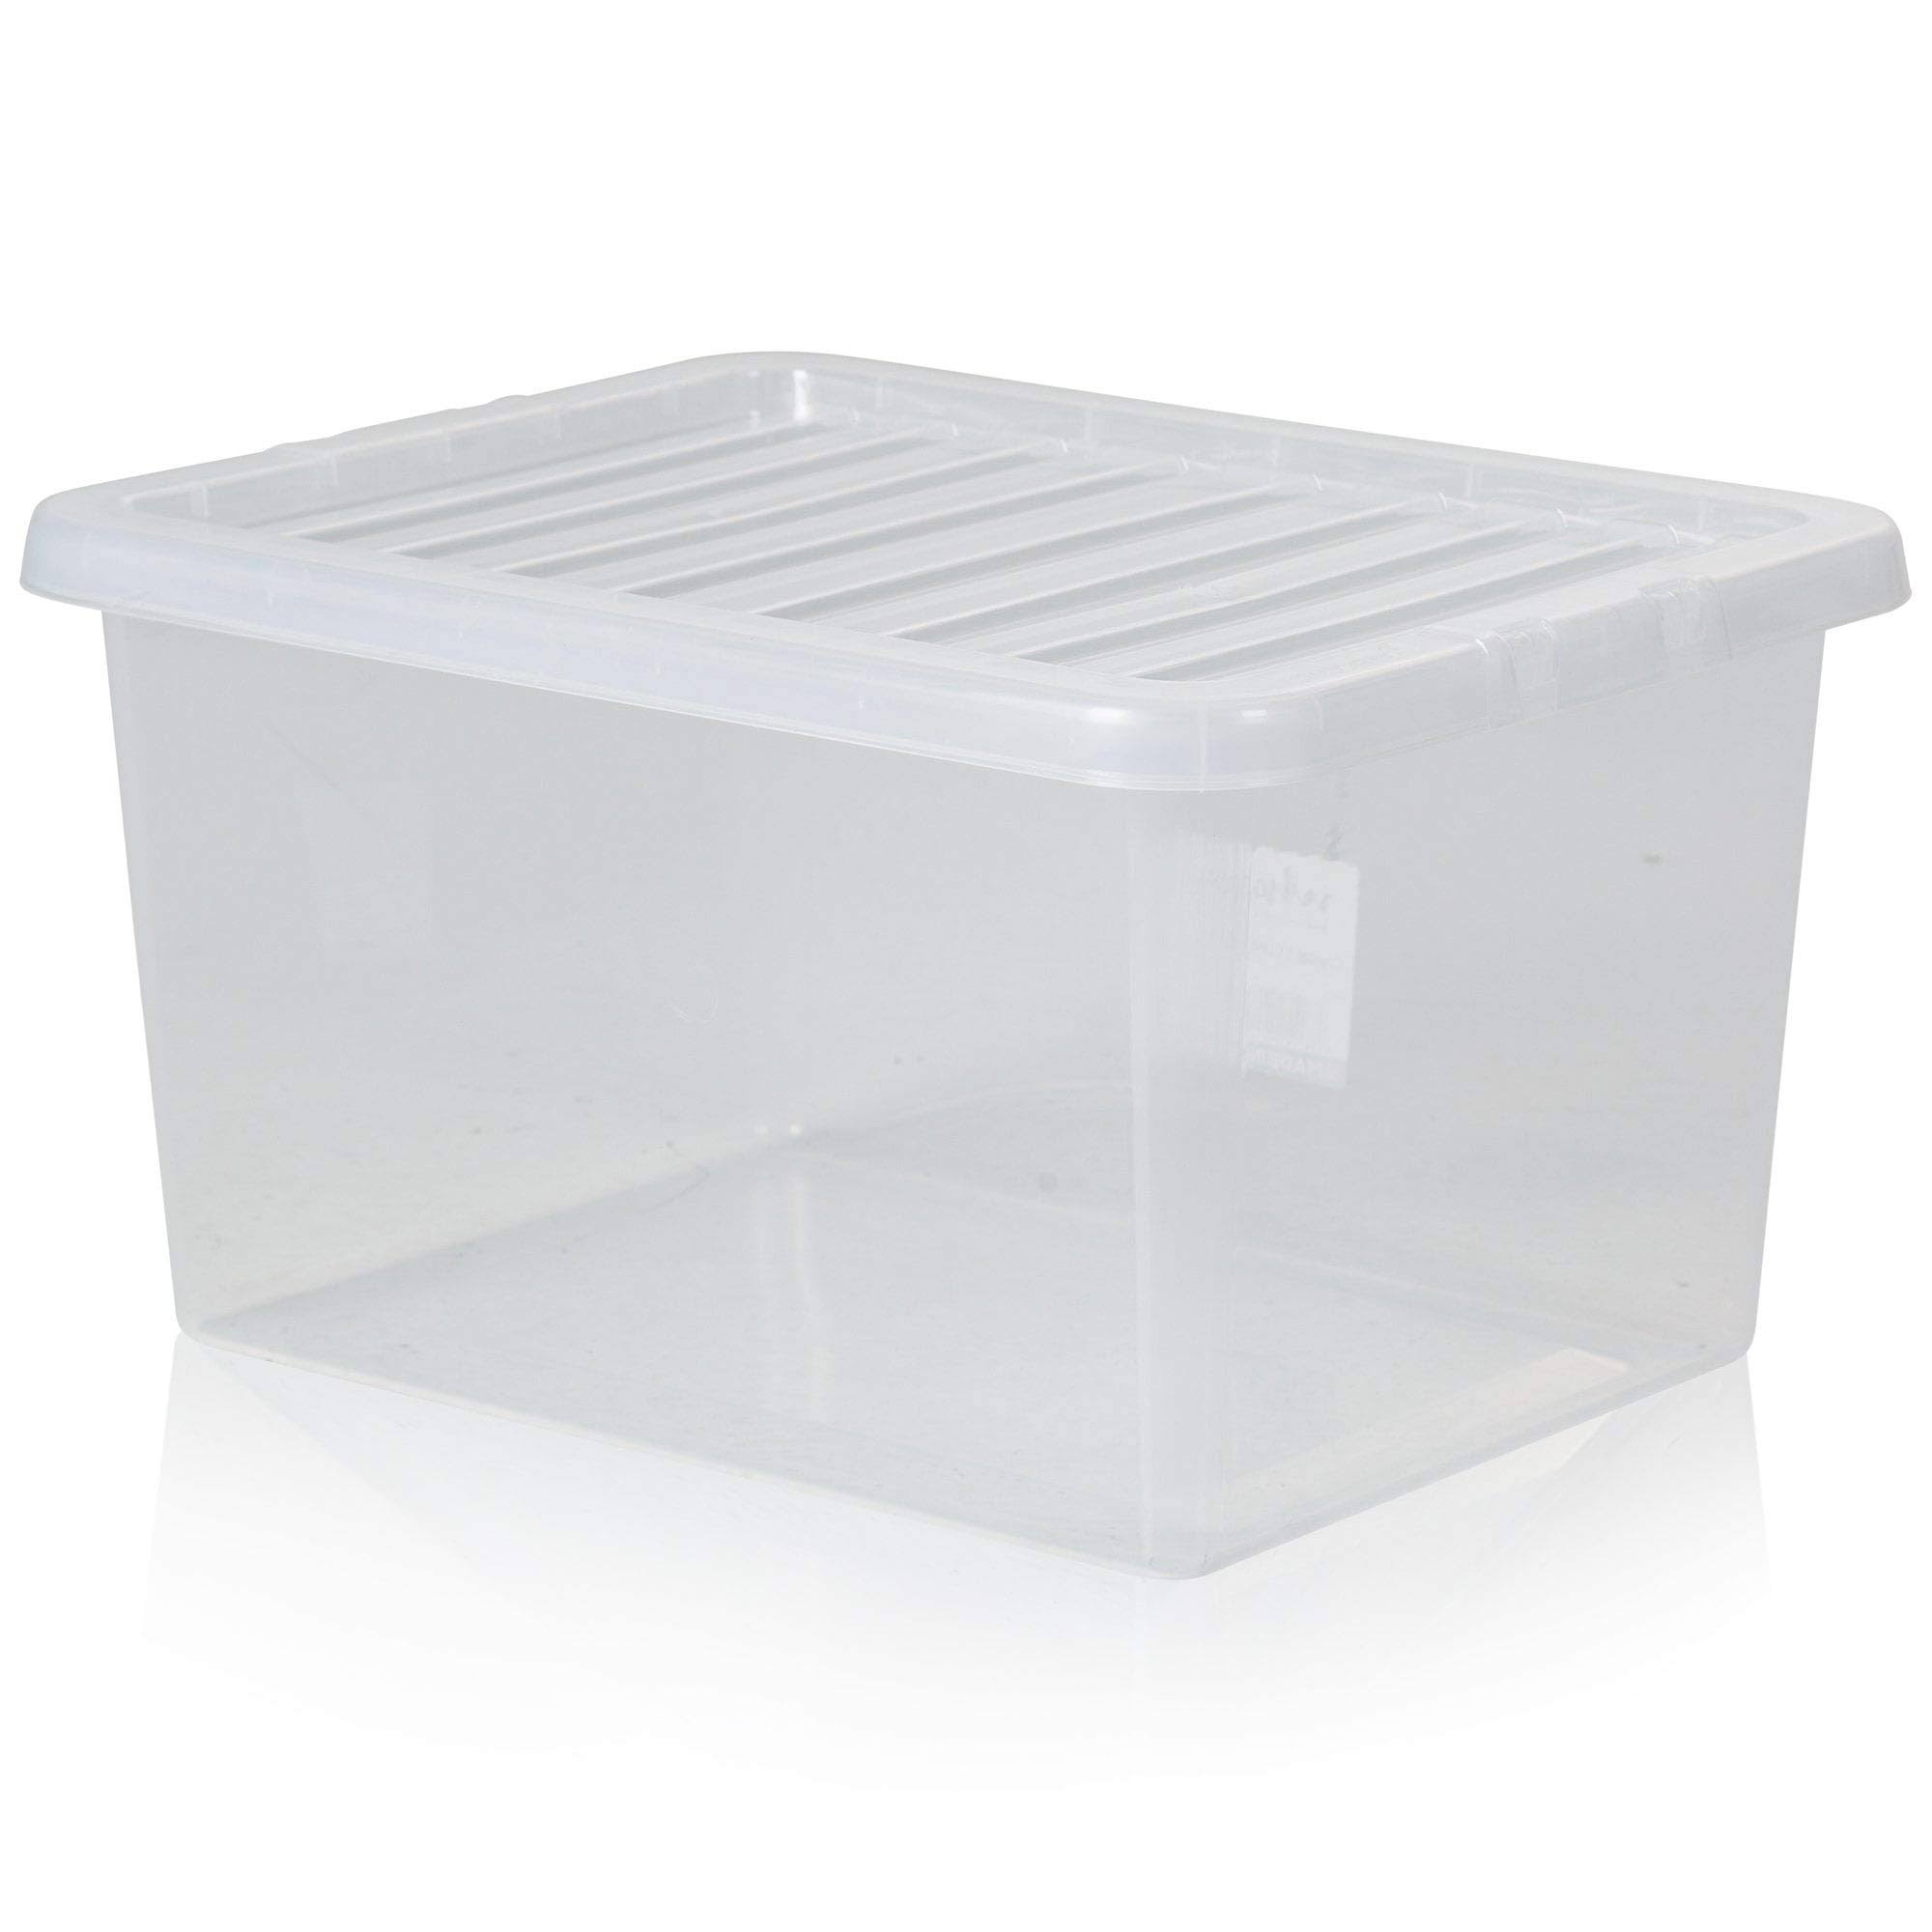 Wham Set 5 Crystal 31 Litre Box & Lid - Clear